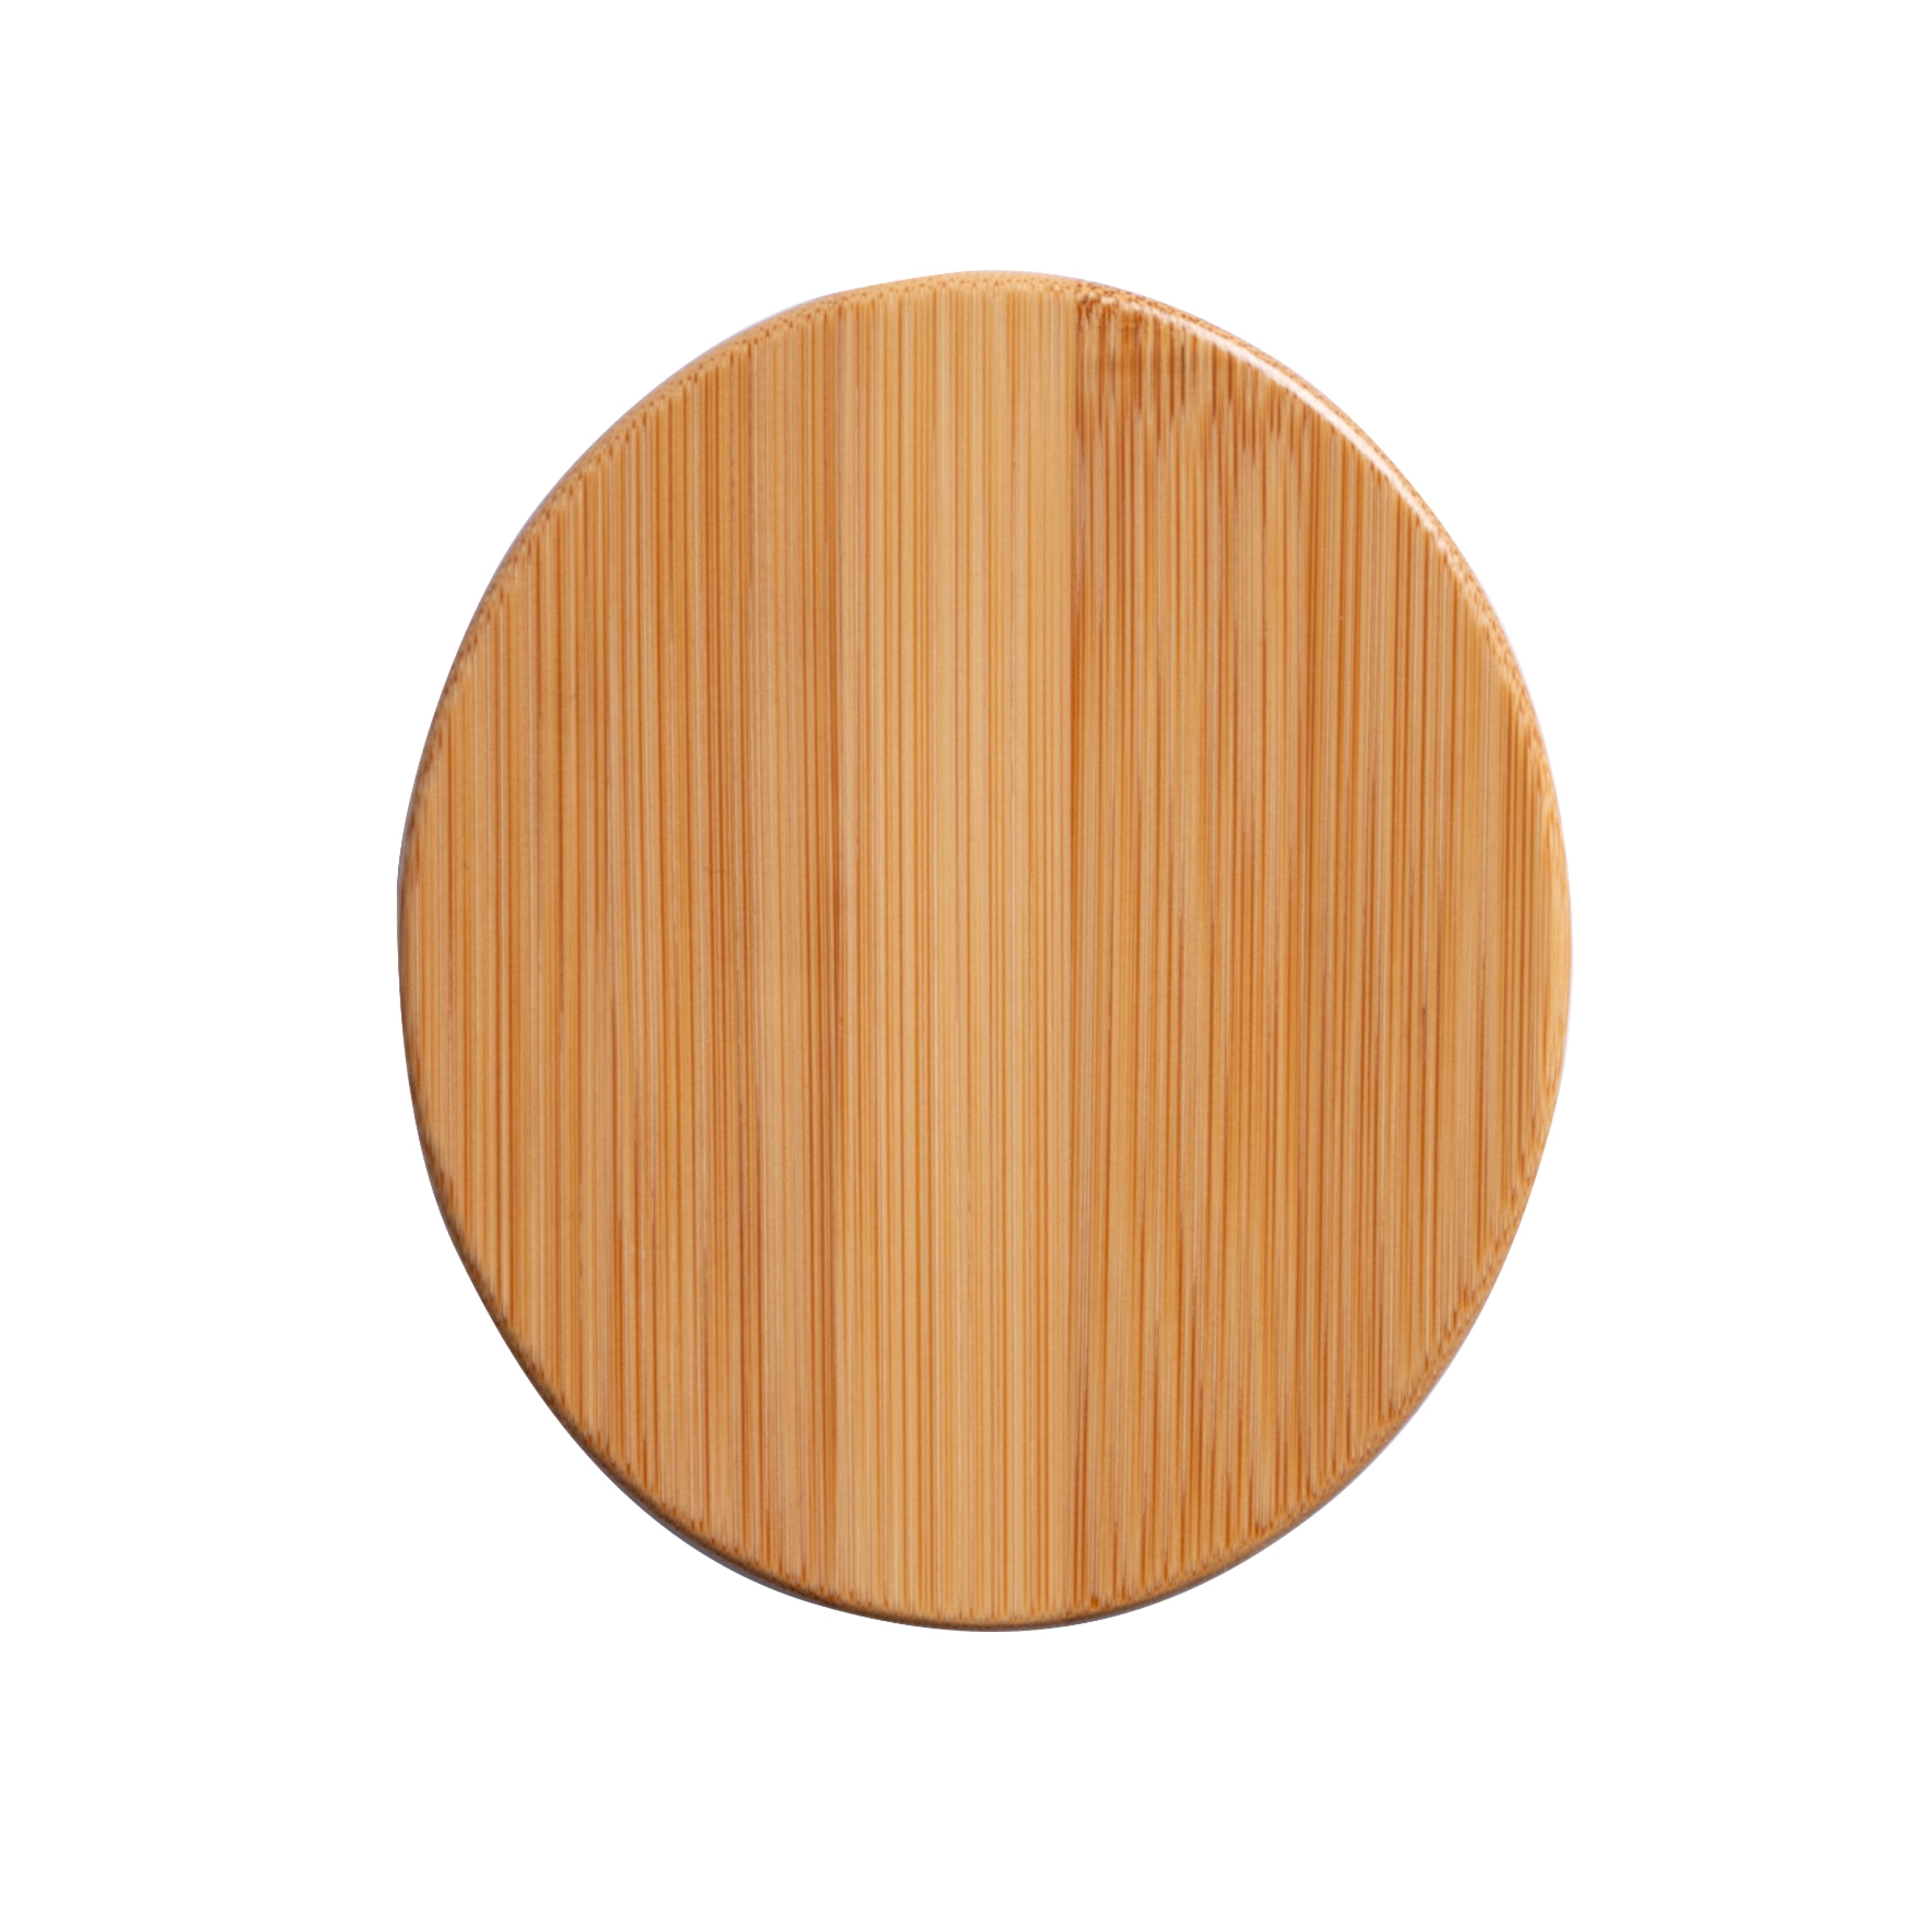 Furbo-360 Bamboo Wood Cover